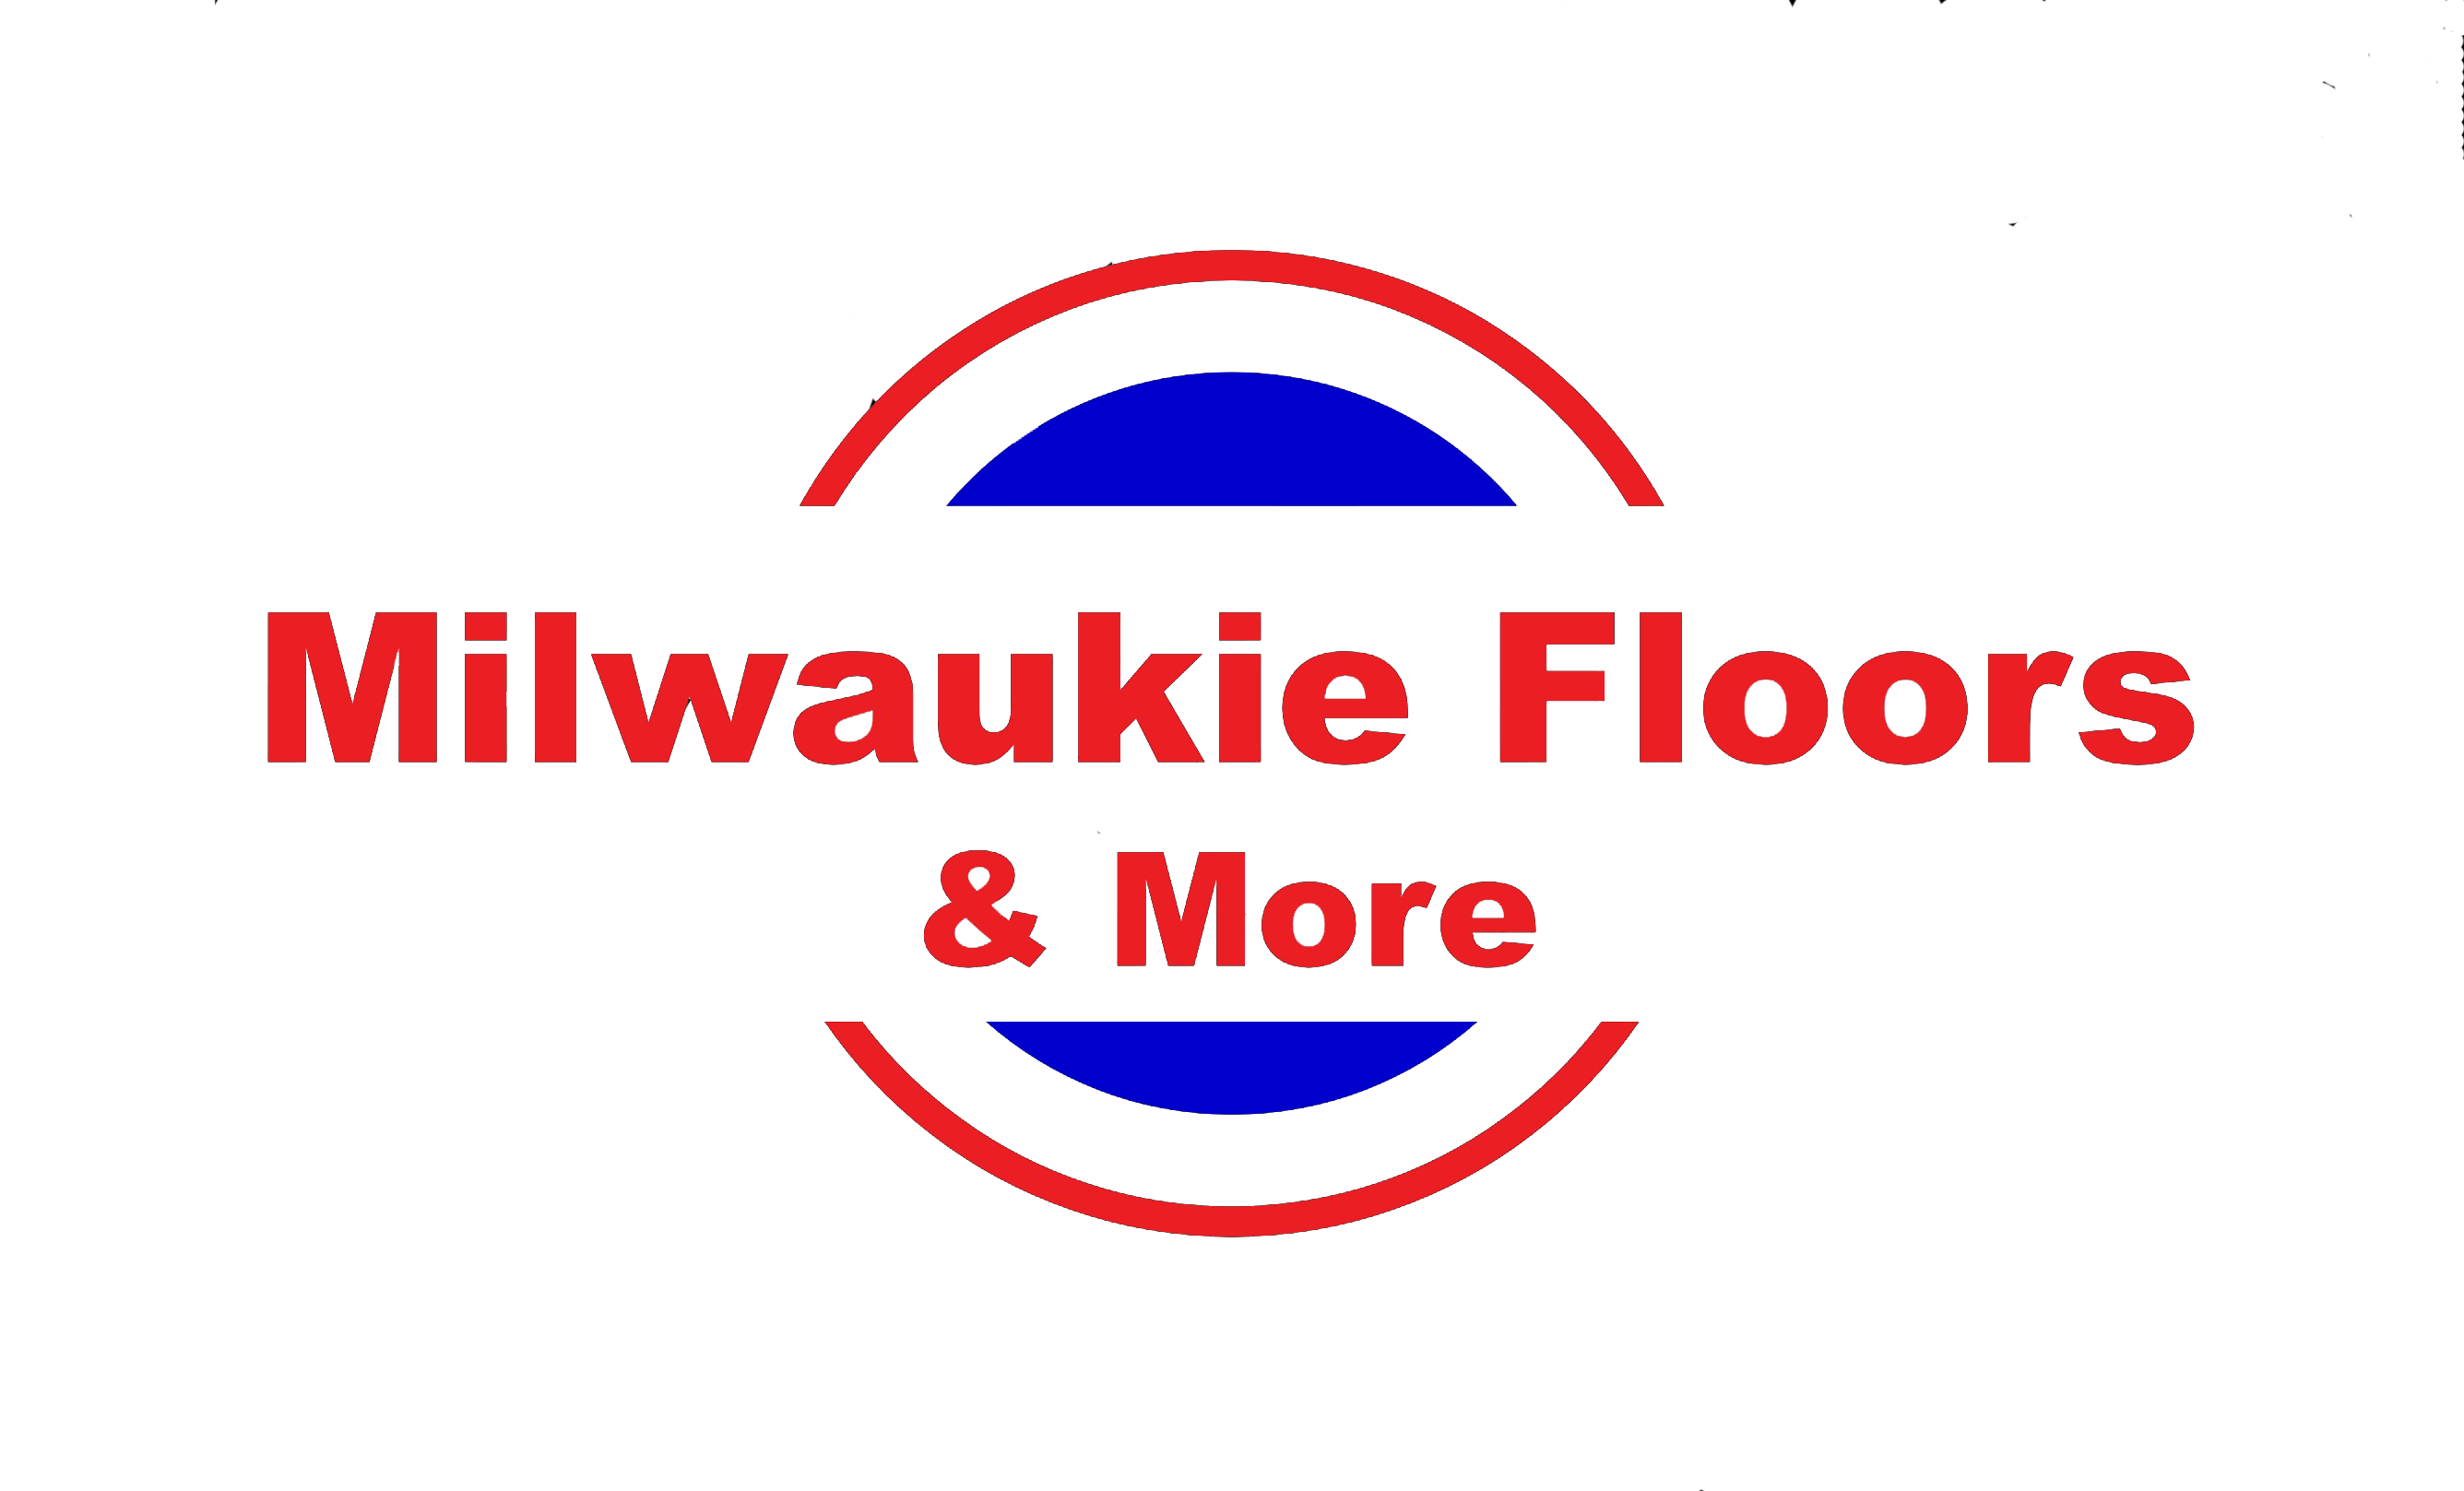 Milwaukie Floors and More